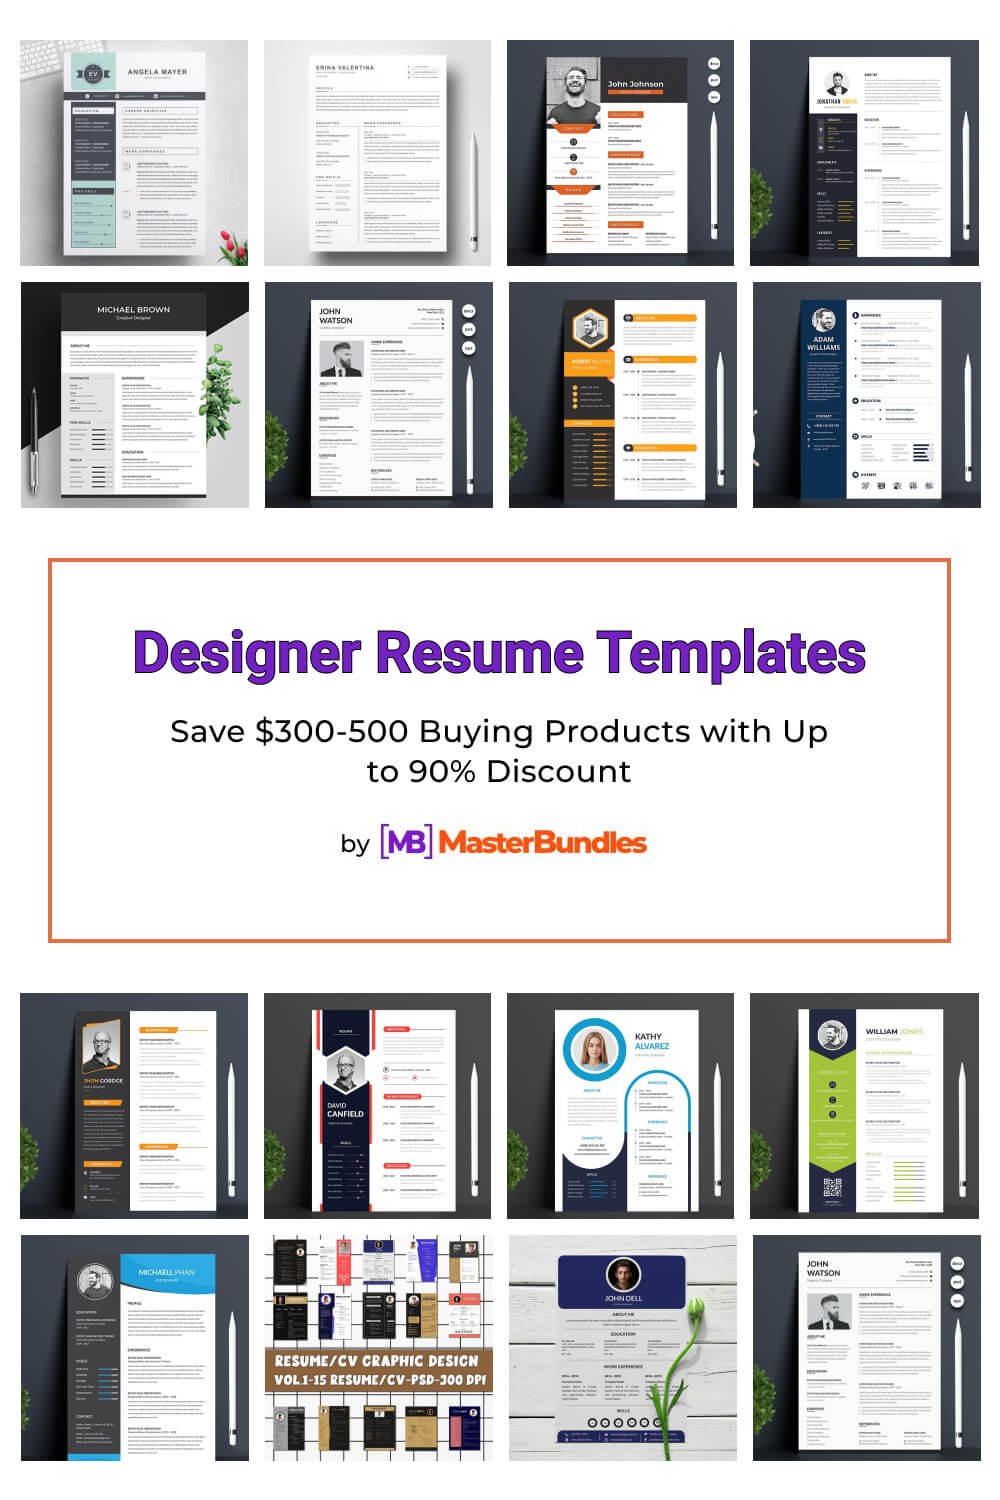 designer resume templates pinterest image.